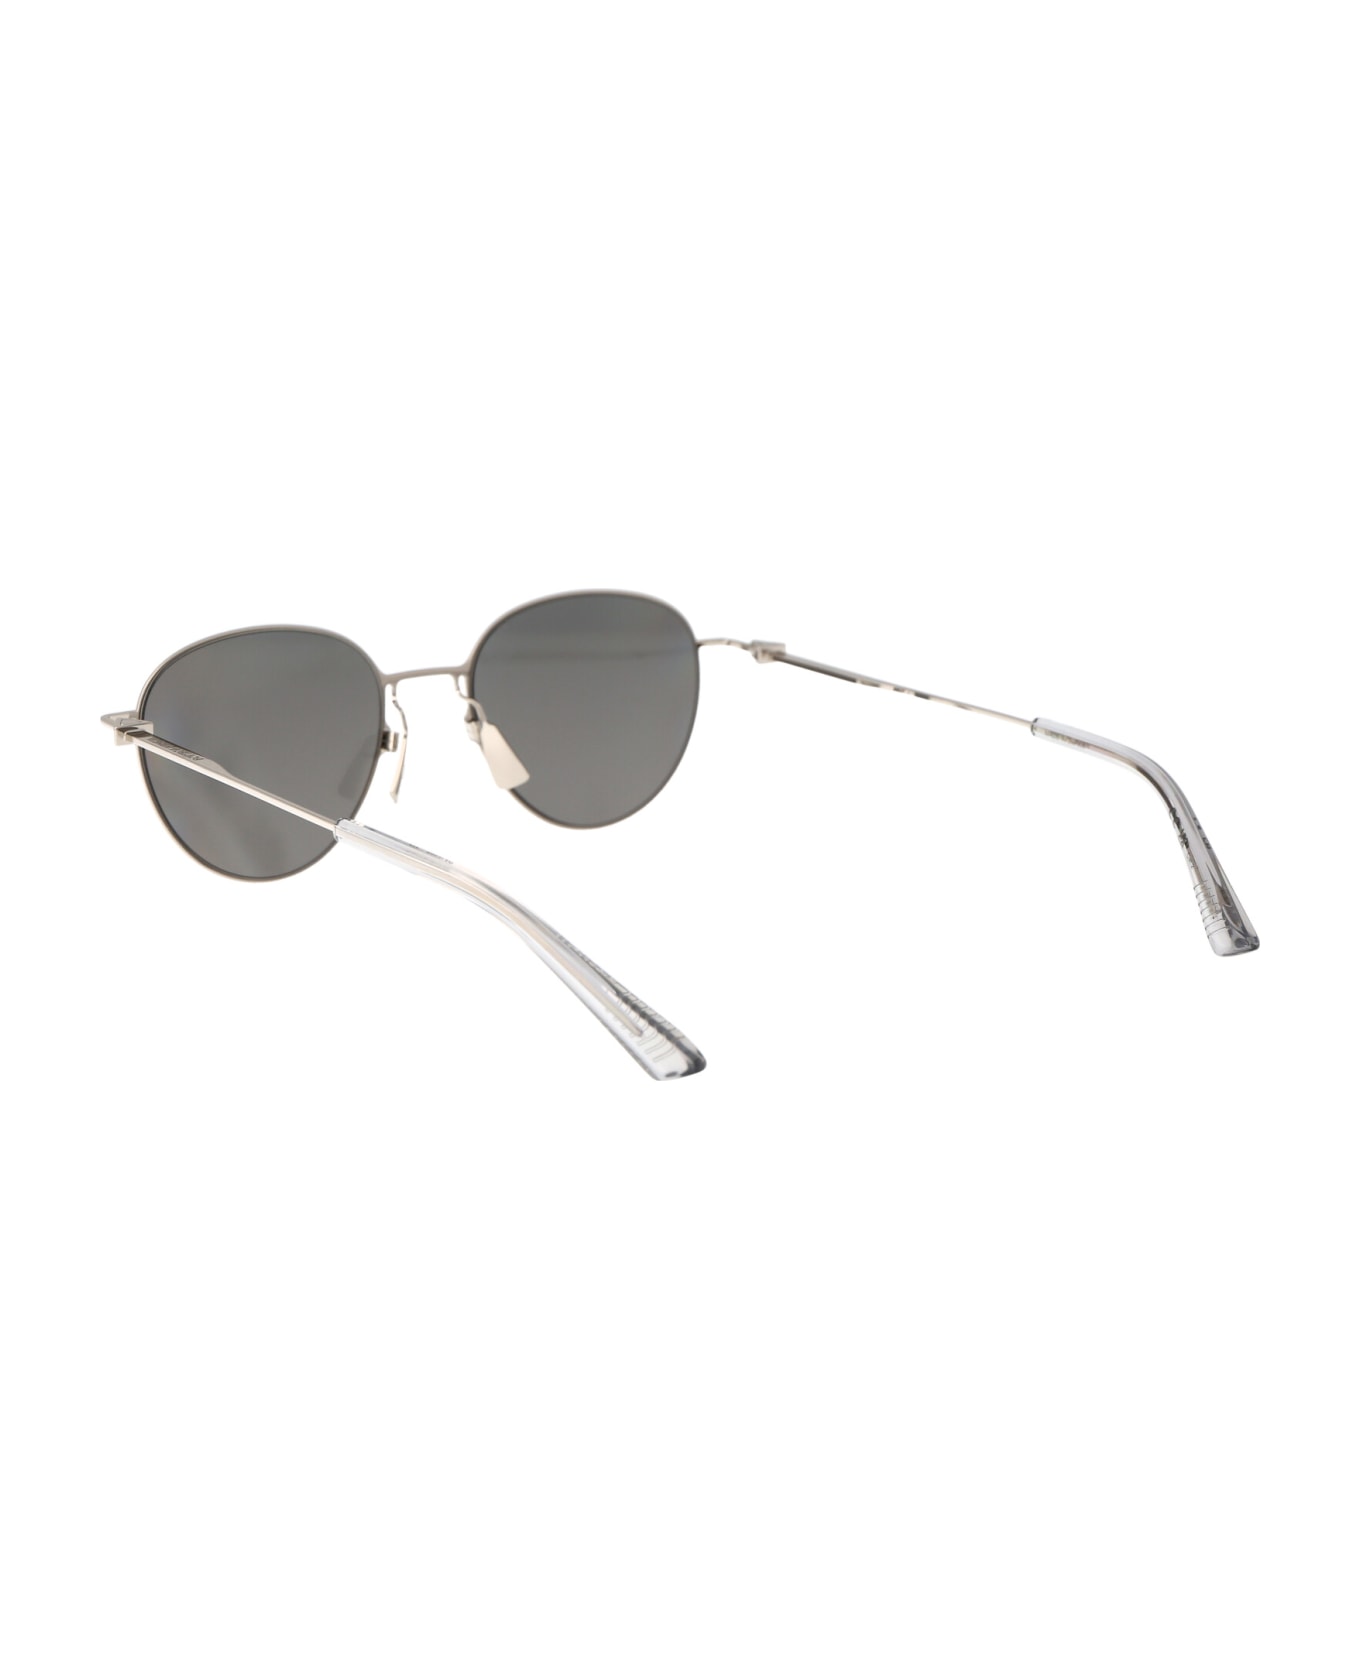 Bottega Veneta Eyewear Bv1268s Sunglasses - 003 SILVER SILVER SILVER